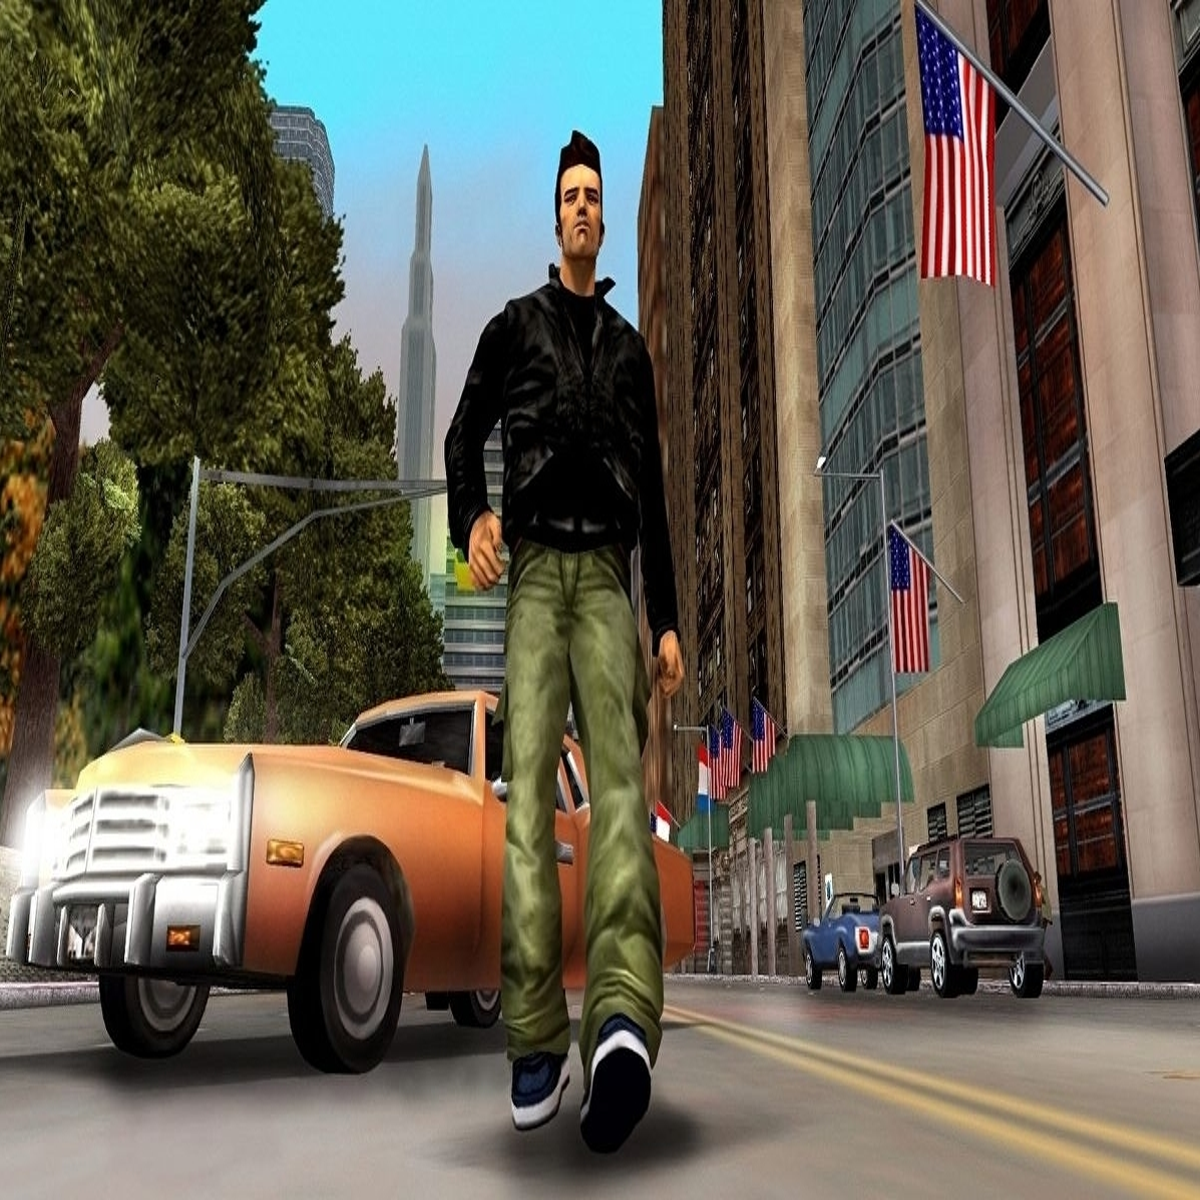 Rockstar irá remover GTA 3, San Andreas e Vice City das lojas